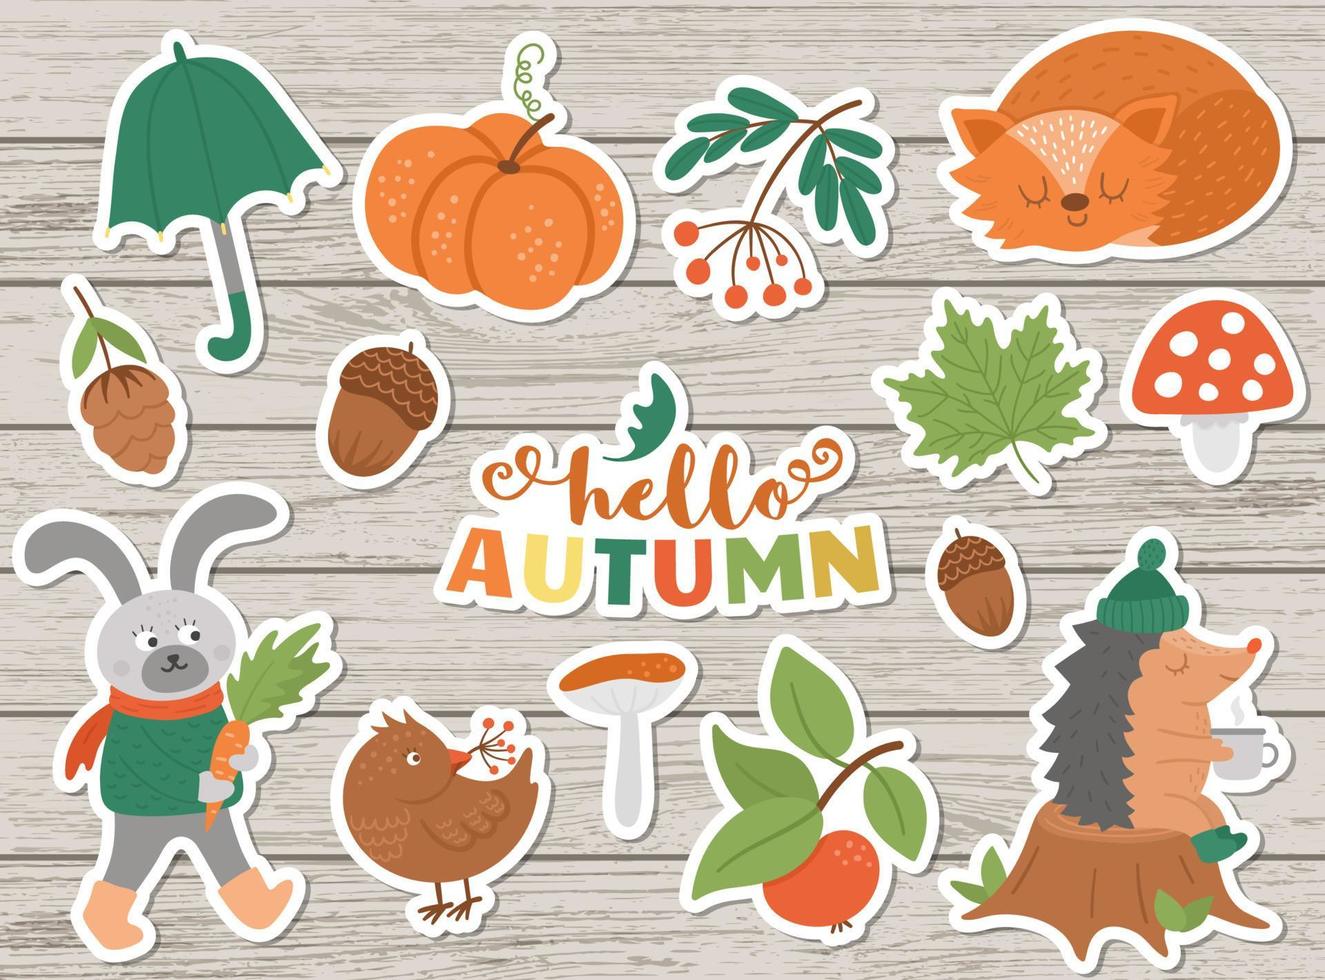 Vector autumn sticker pack. Cute fall season icons set for prints, badges.  Funny illustration of forest animals, pumpkins, mushrooms, leaves, harvest, vegetables, birds